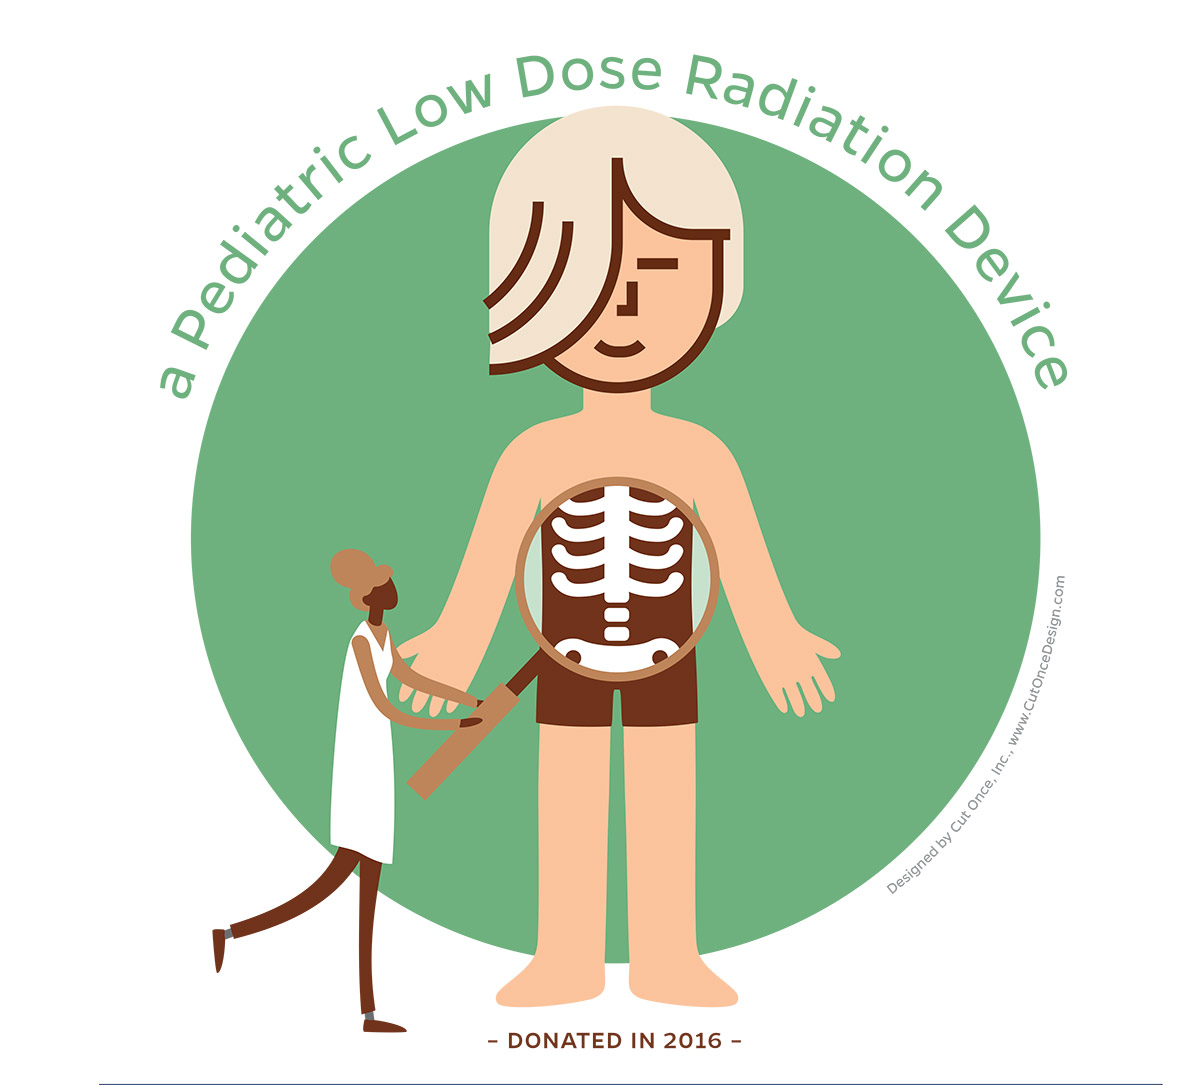 a pediatric low dose radiation device